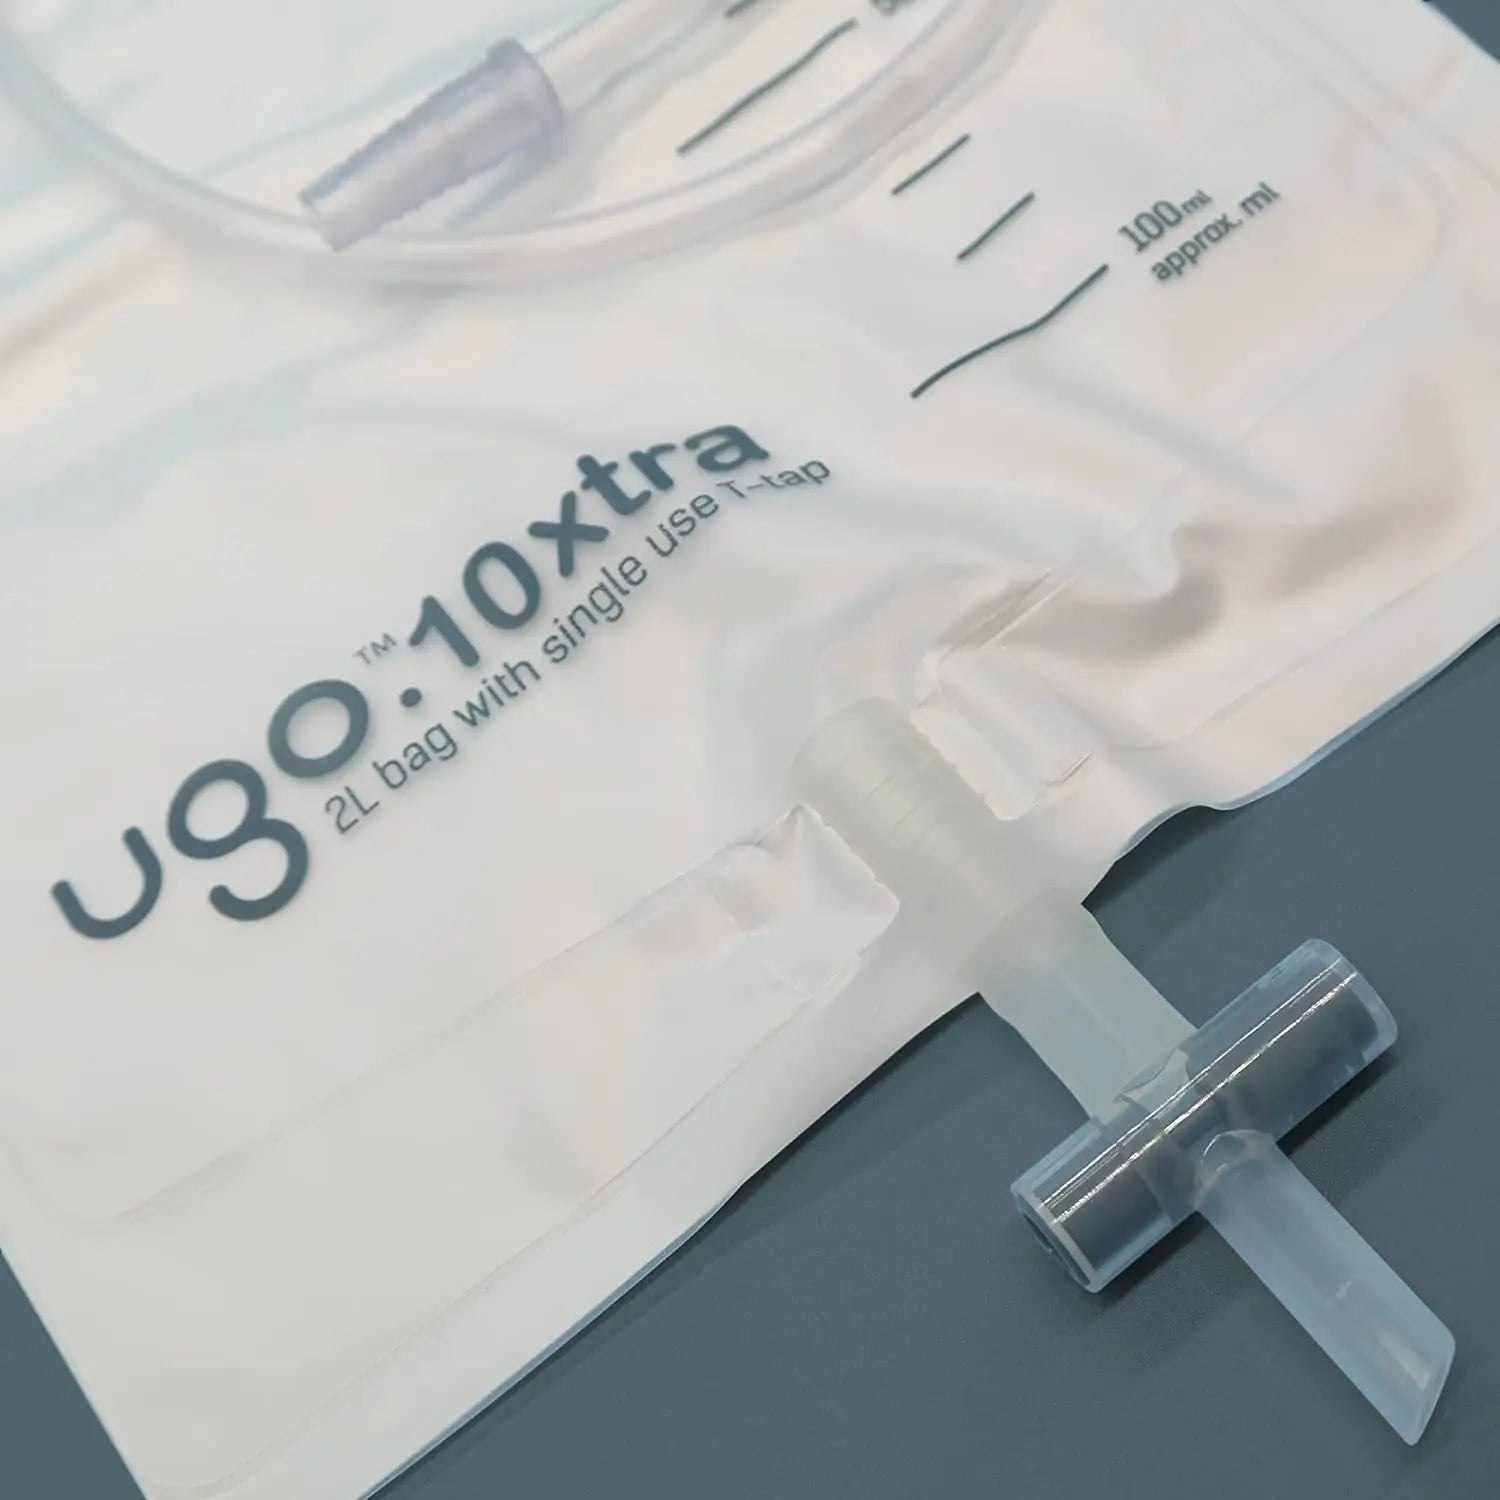 Assure Urine Bag Sterile 2L T-Outlet With 120cm Tubing